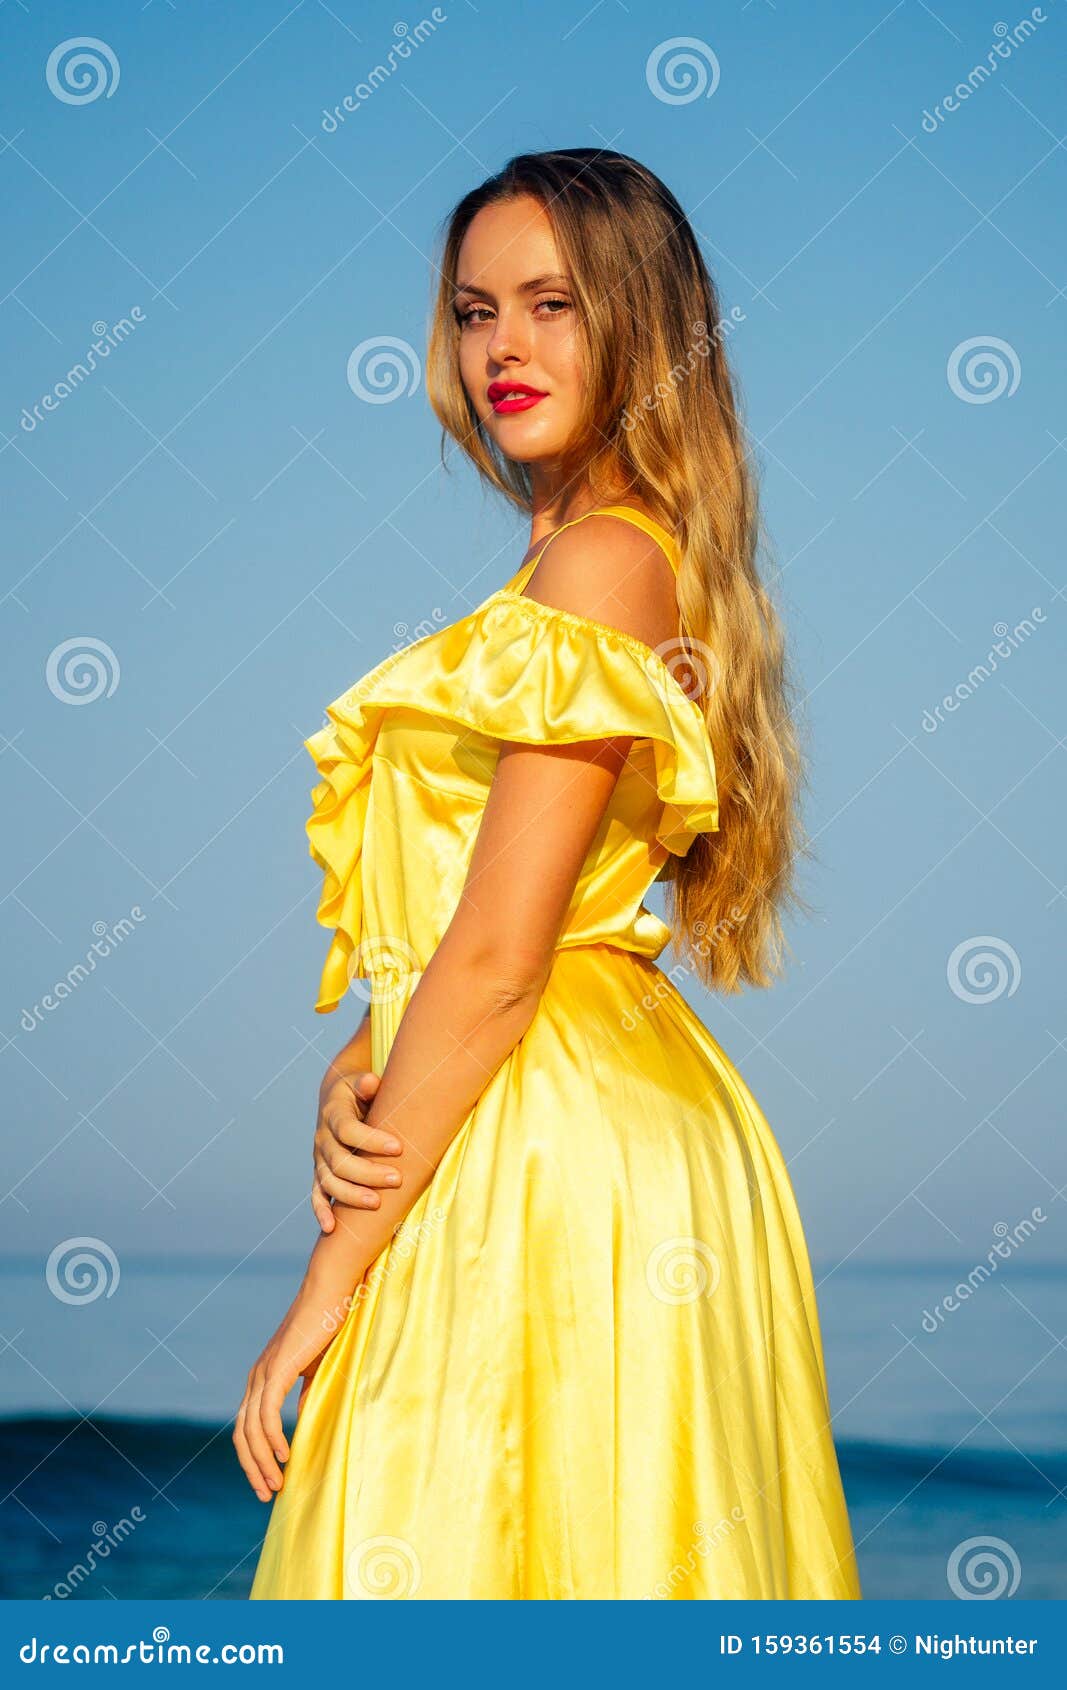 pale yellow silk dress